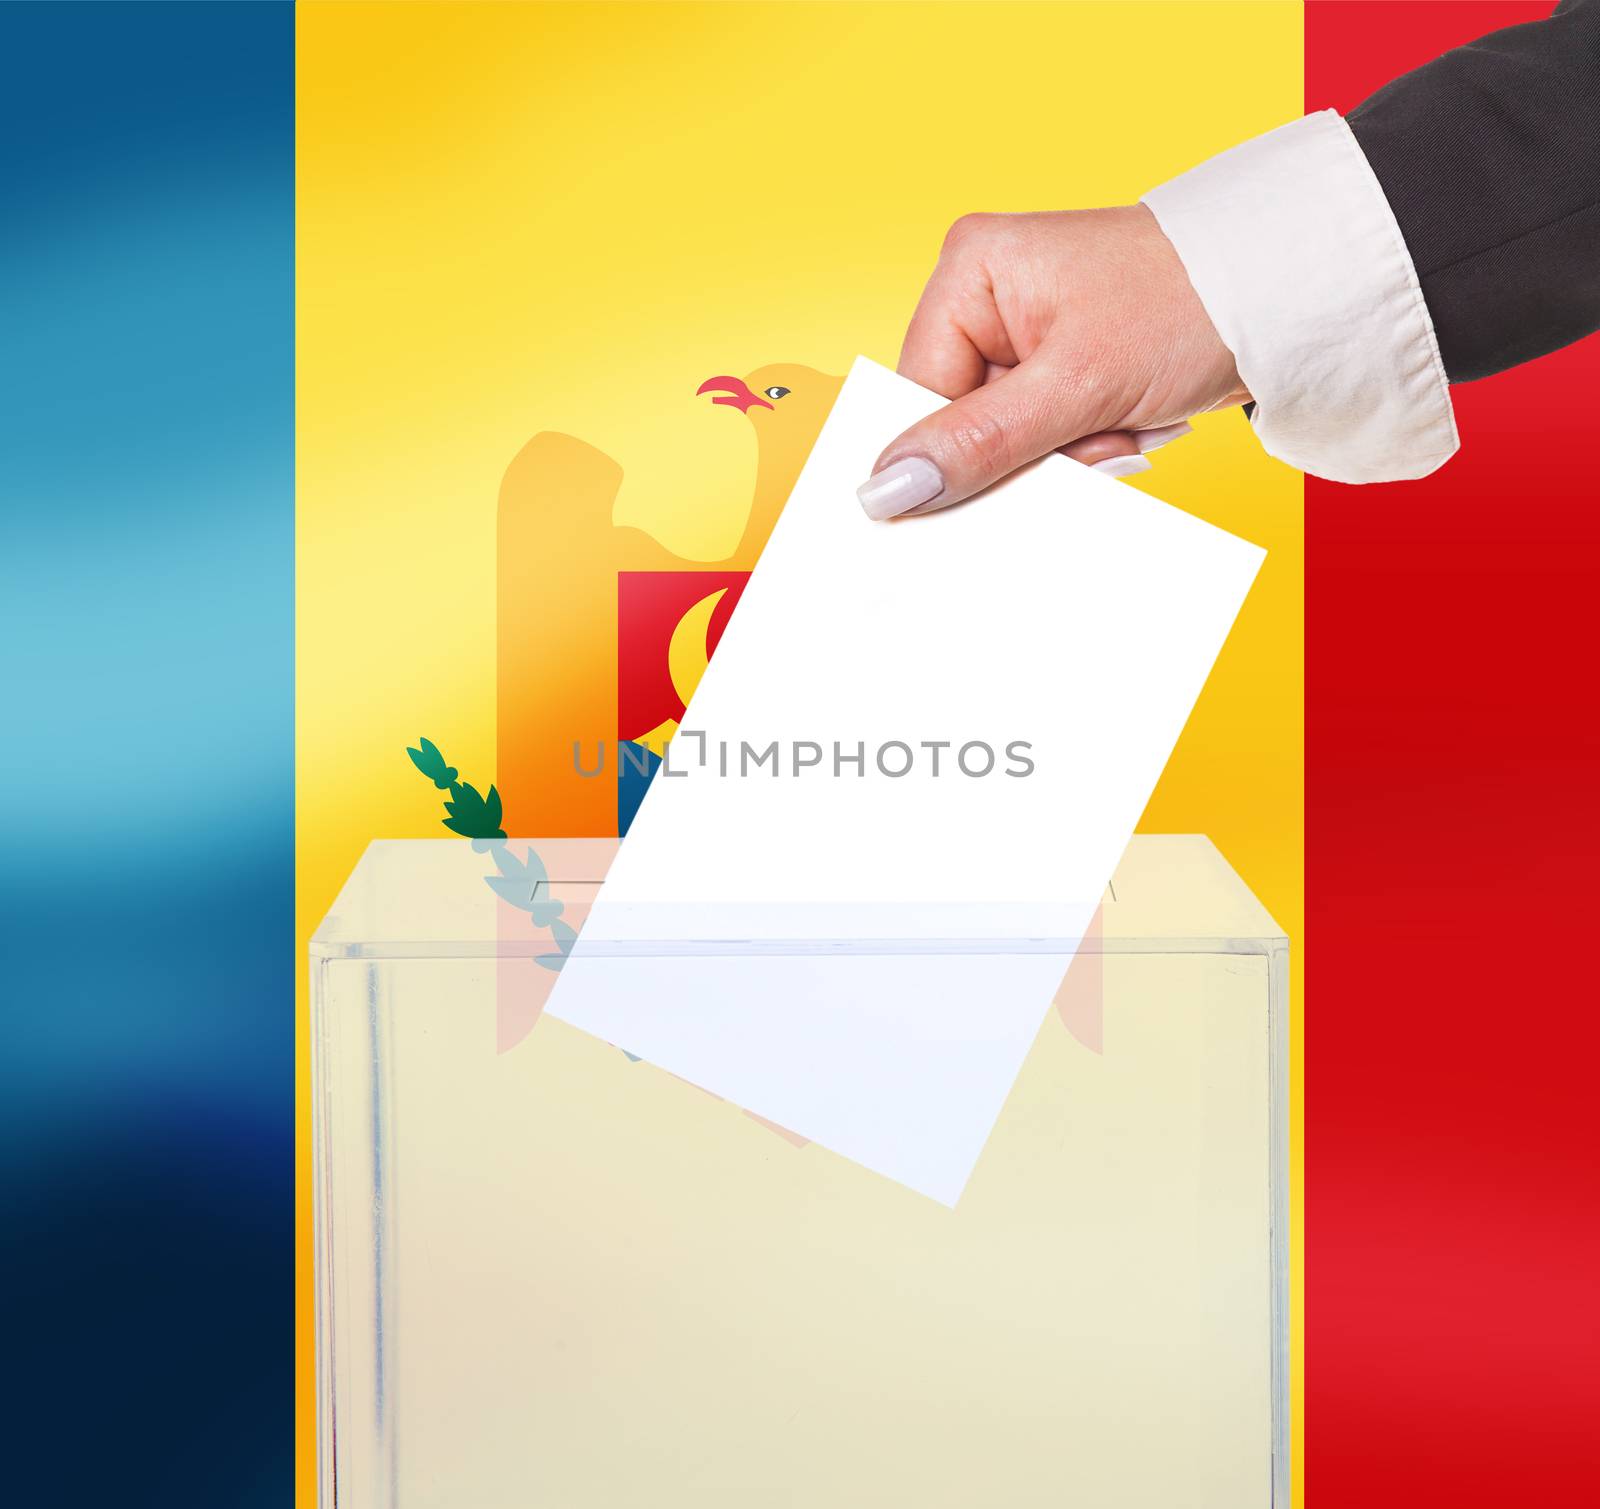 electoral vote by ballot, under the Moldova flag